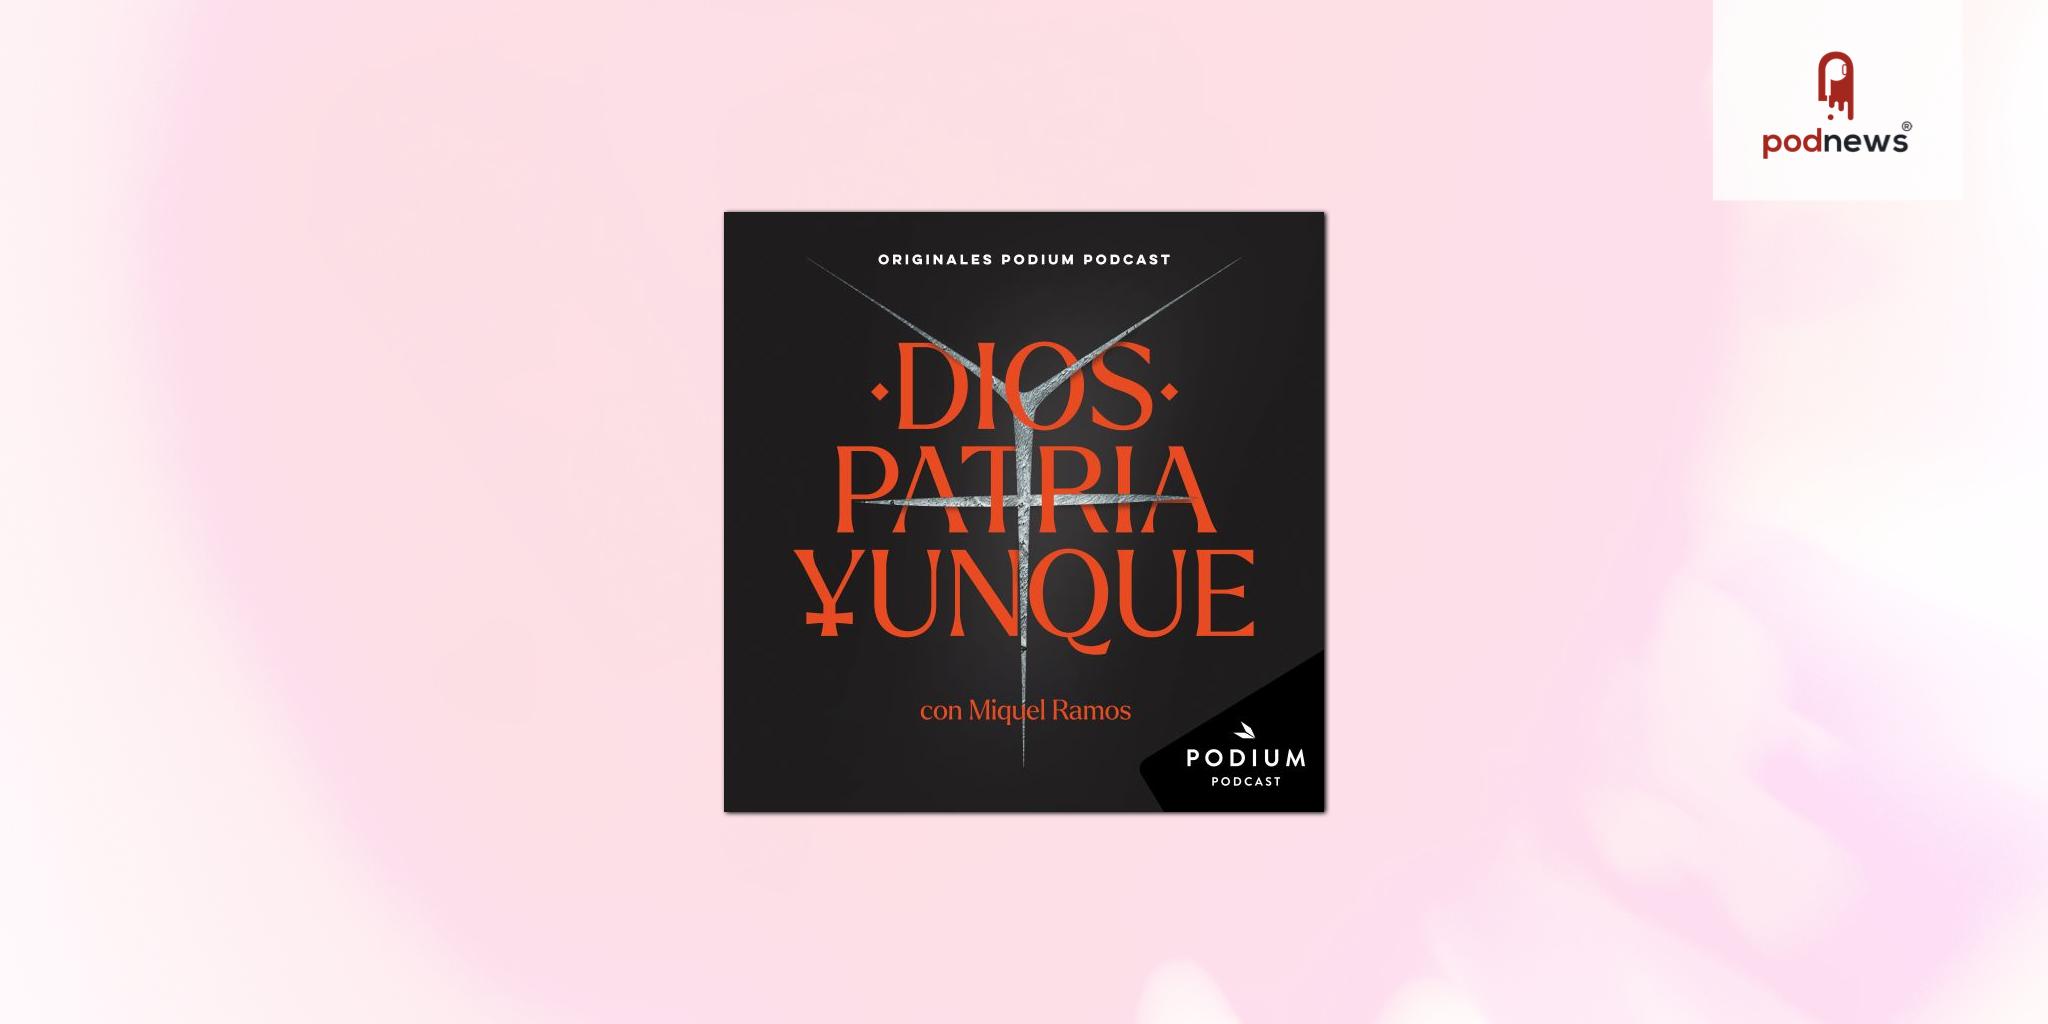 Podium Podcast premieres 'Dios, patria, Yunque', a production about an ultra-Catholic secret organization